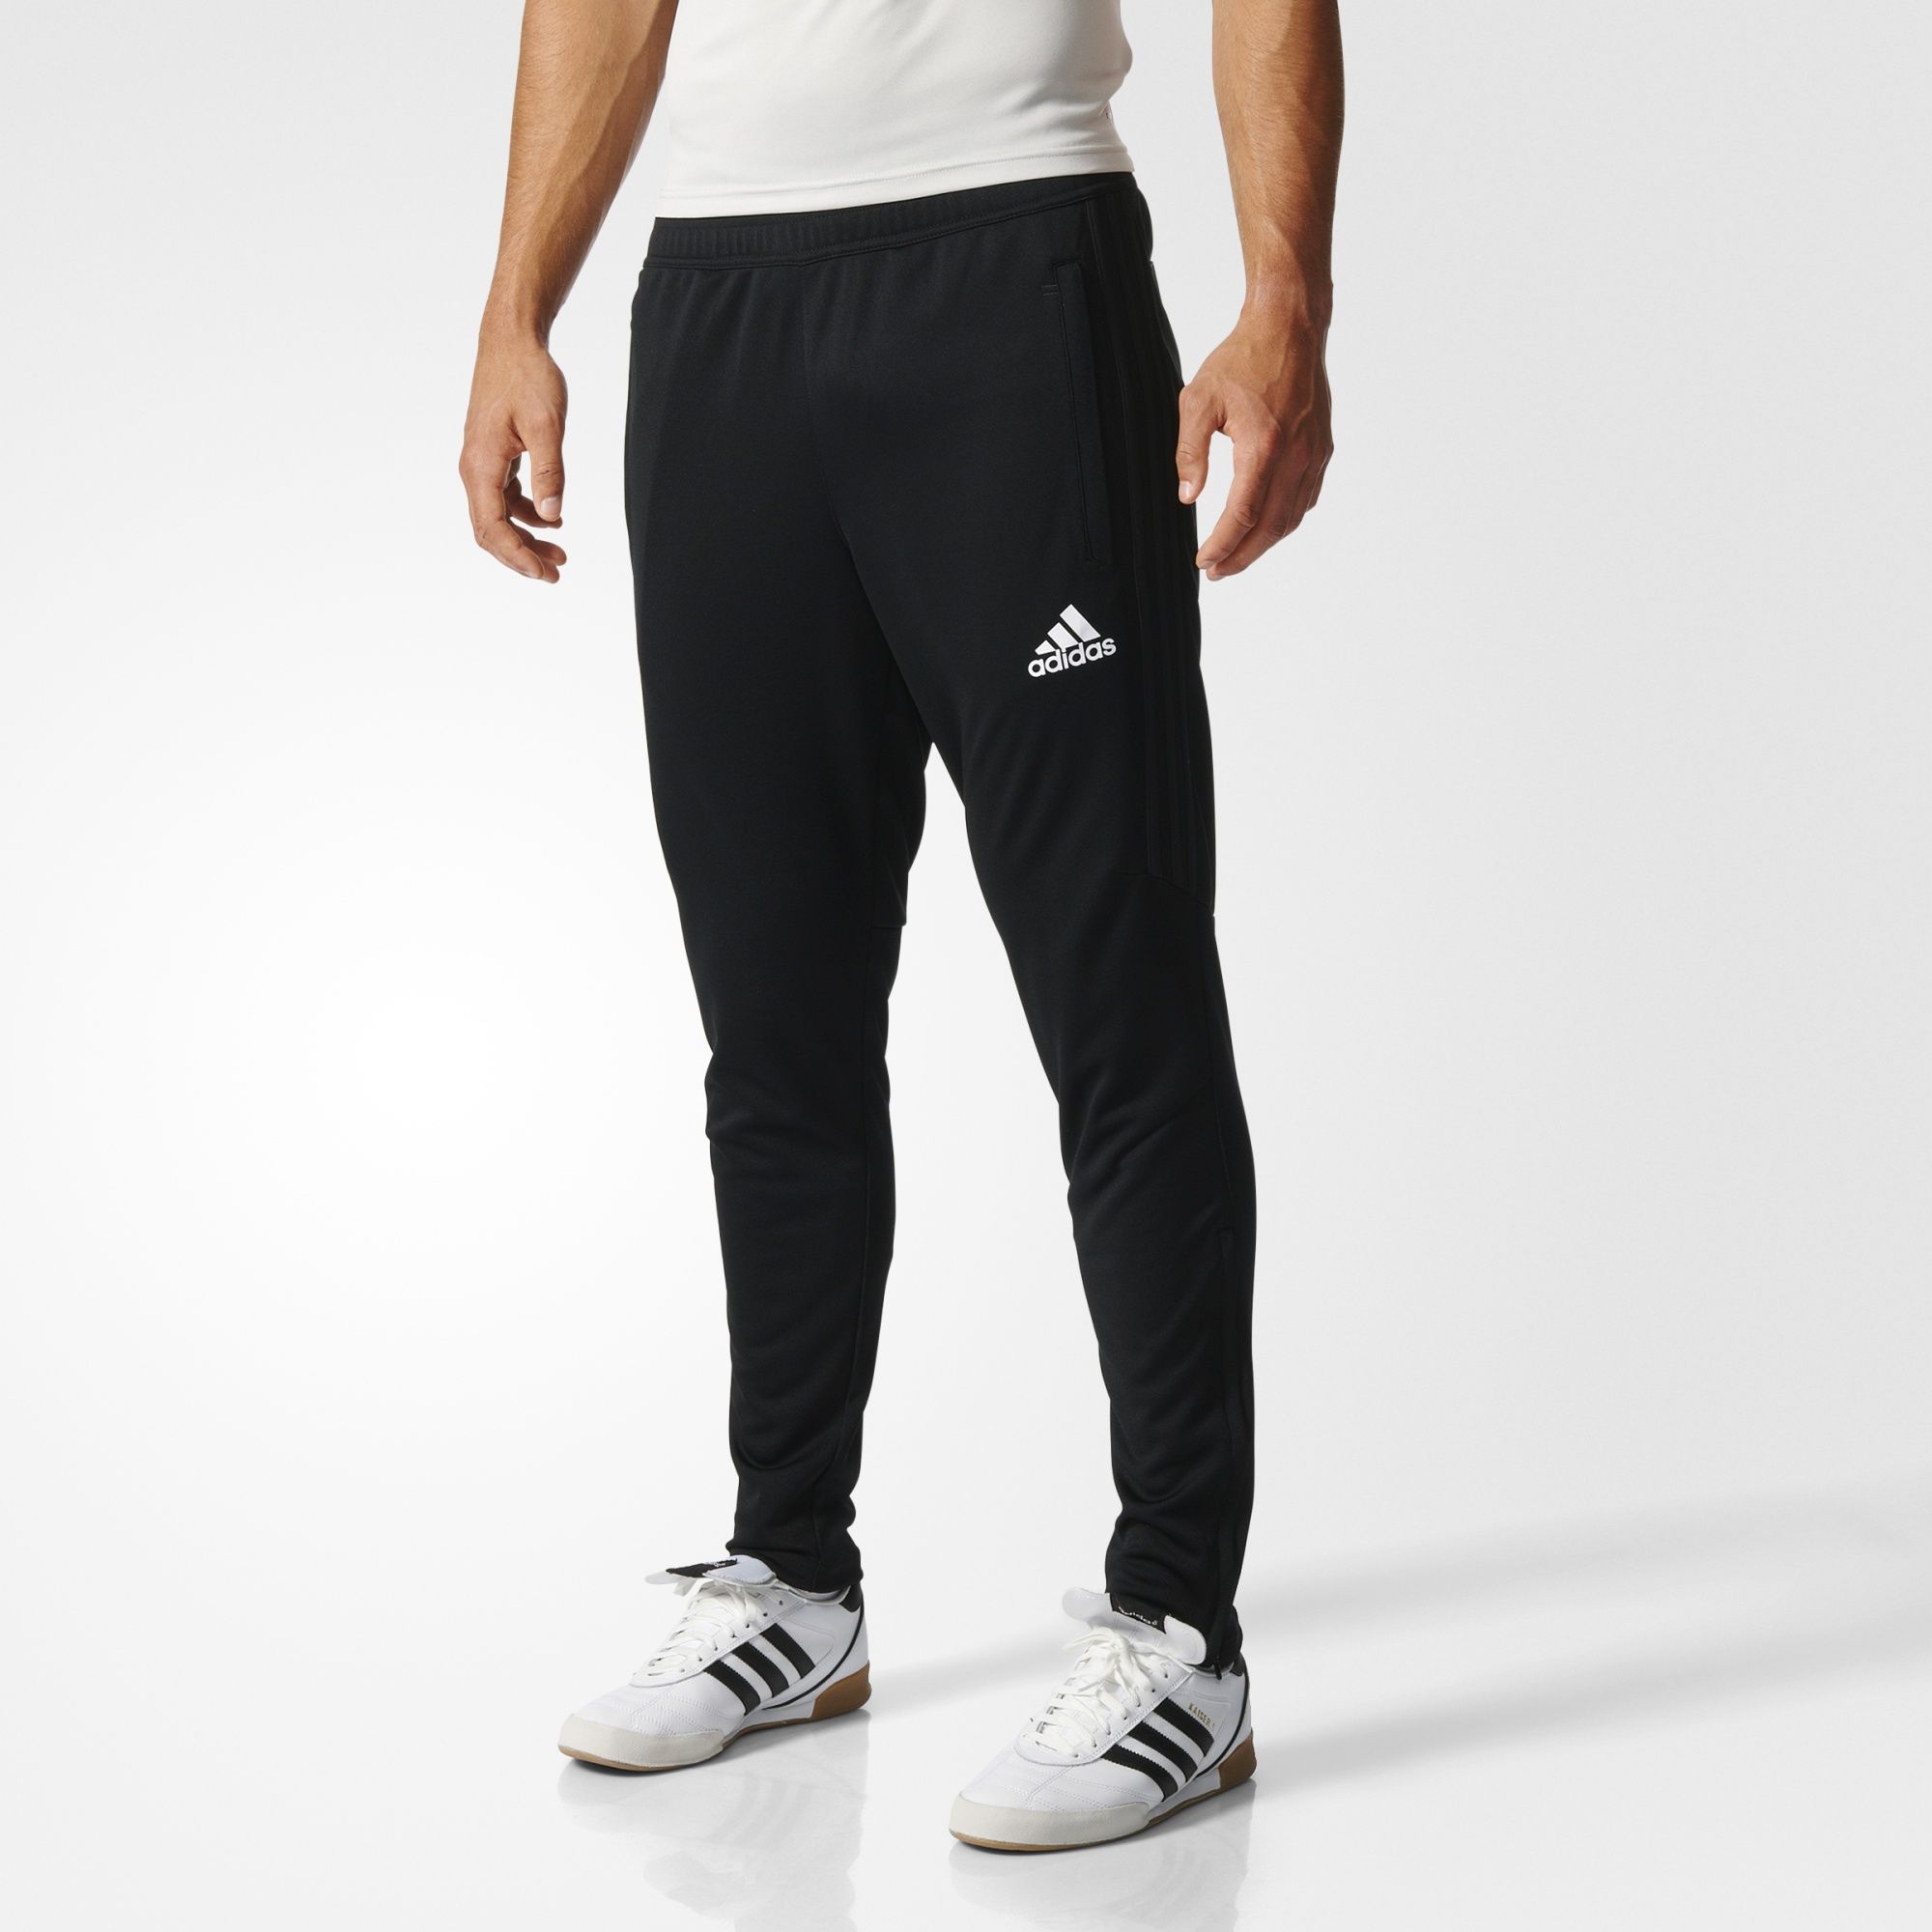 Adidas TIRO 17 TRAINING PANTS - Soccer Premier